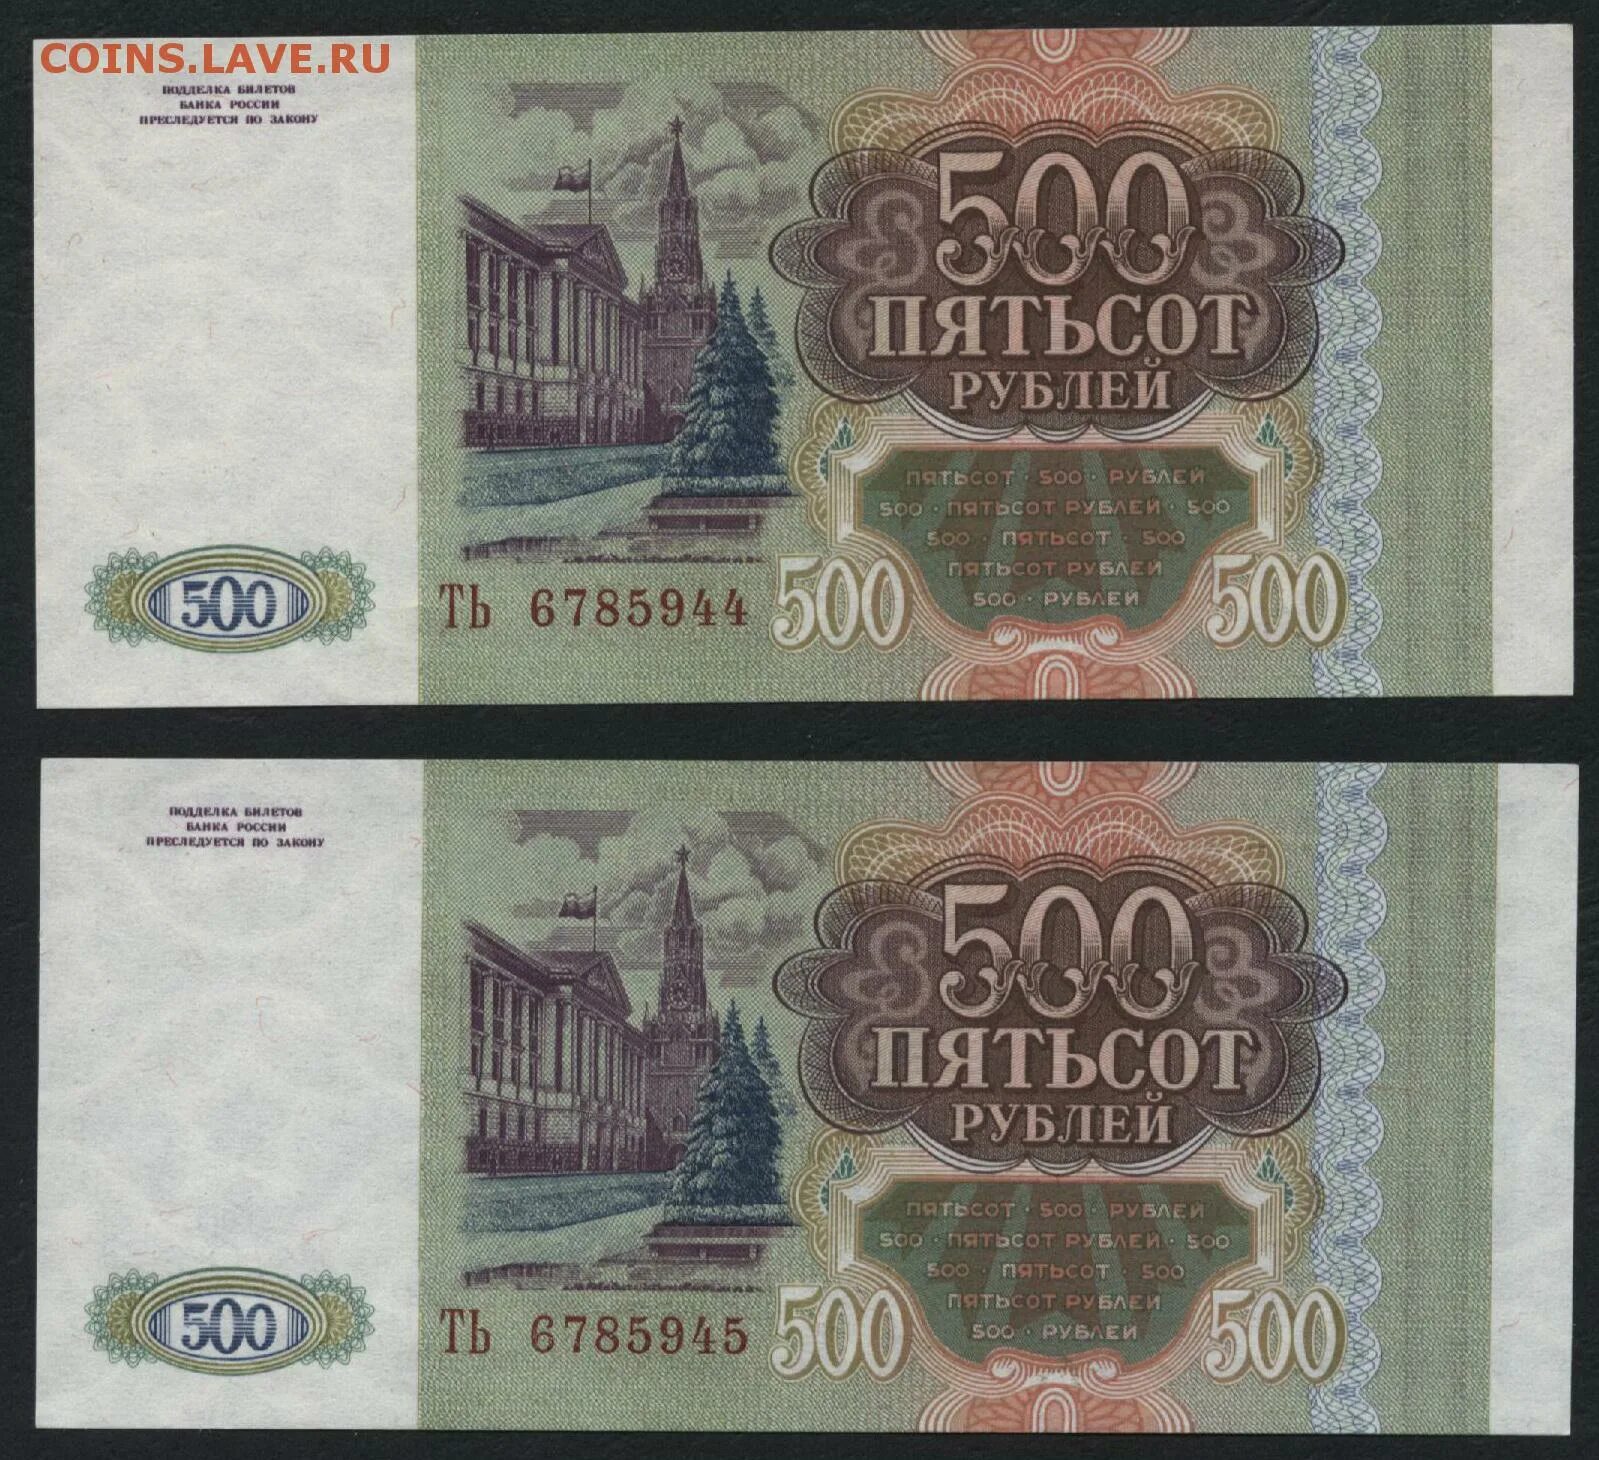 500 Рублей. 500 Рублей 1993. Пятьсот рублей 1993. 500 Рублей 1993 года. 16 500 в рублях